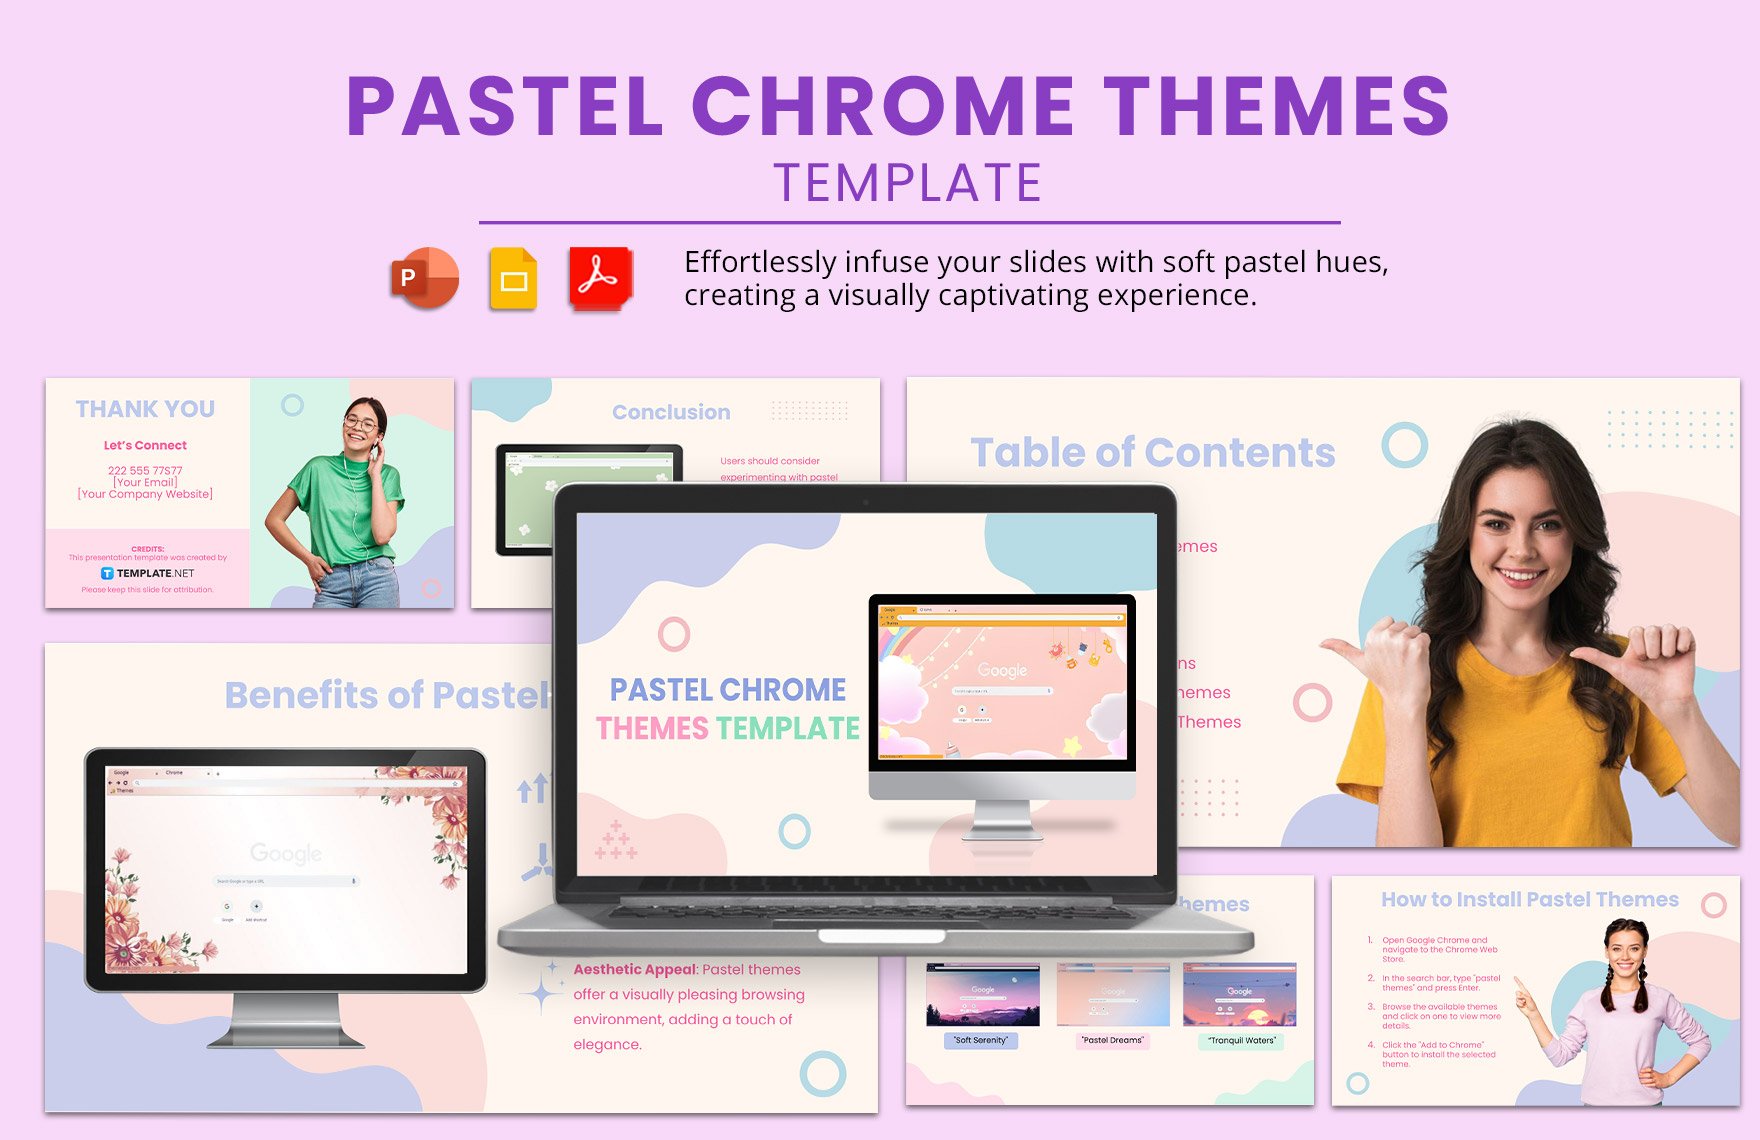 Pastel Chrome Themes Template